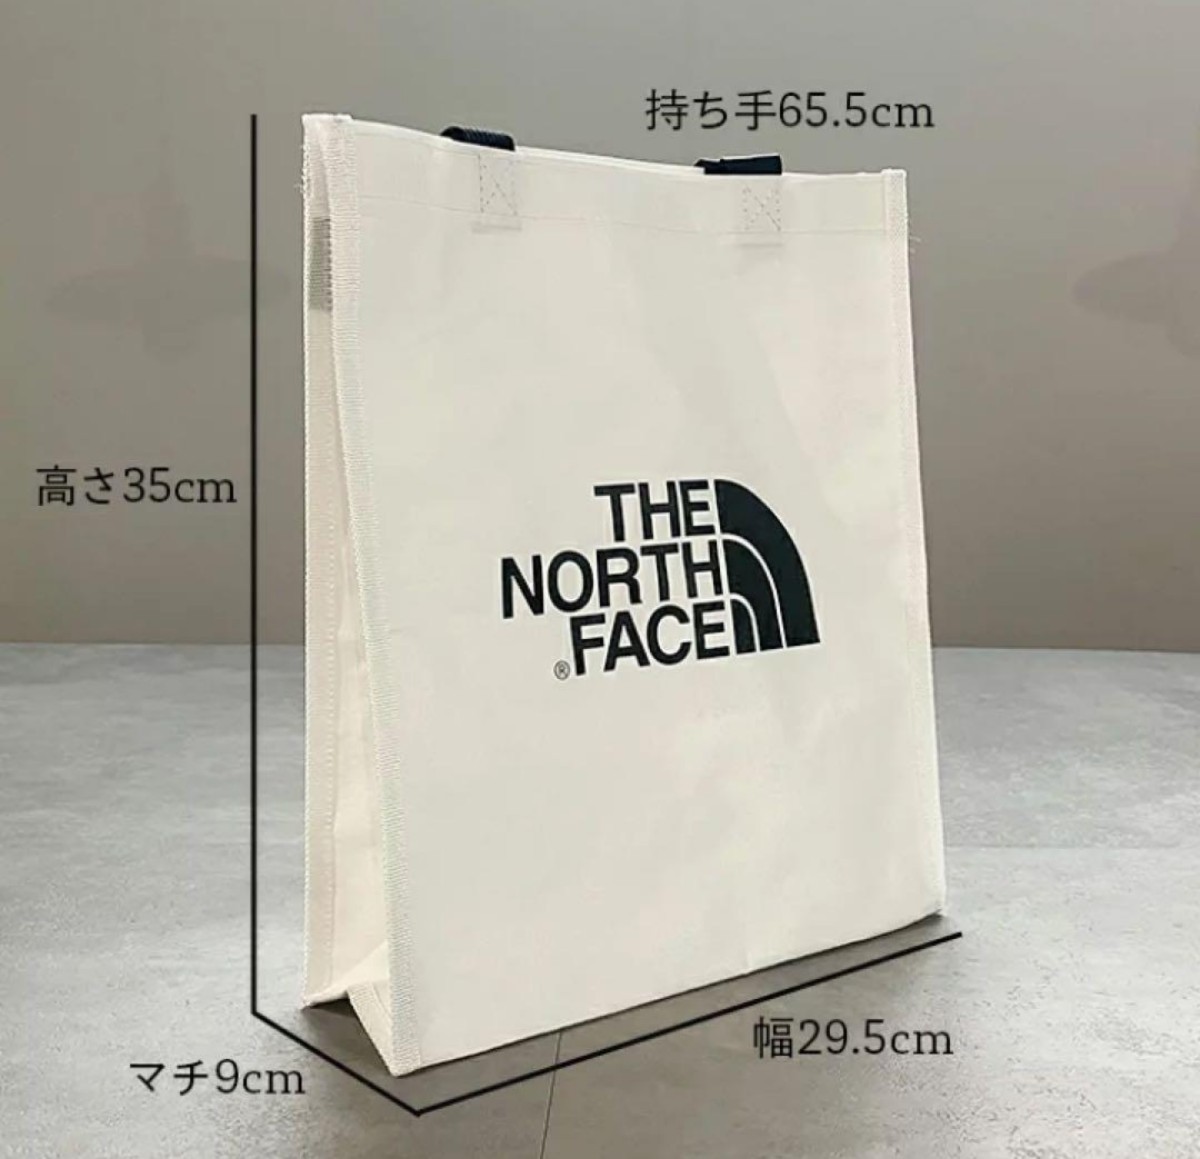 THE NORTH FACE ザノースフェイス SHOPPER BAG ショッピングバッグ エコバック トートバッグ 新品 